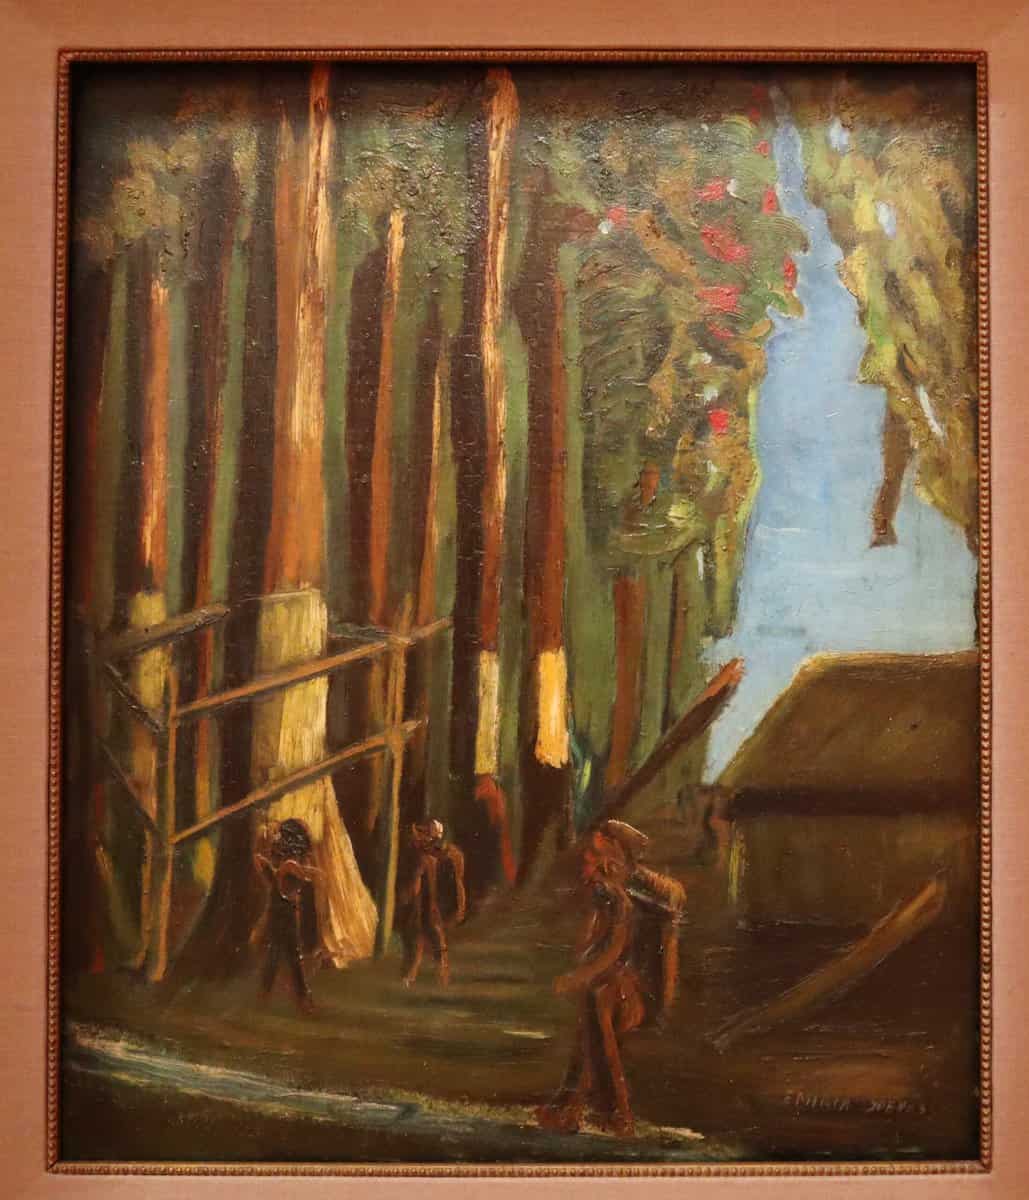 Emiria Sunassa, Panen Damar (Rosin Harvest), Undated. Oil on board. 59.6 x 49.5 cm. Collection of National Gallery Singapore.